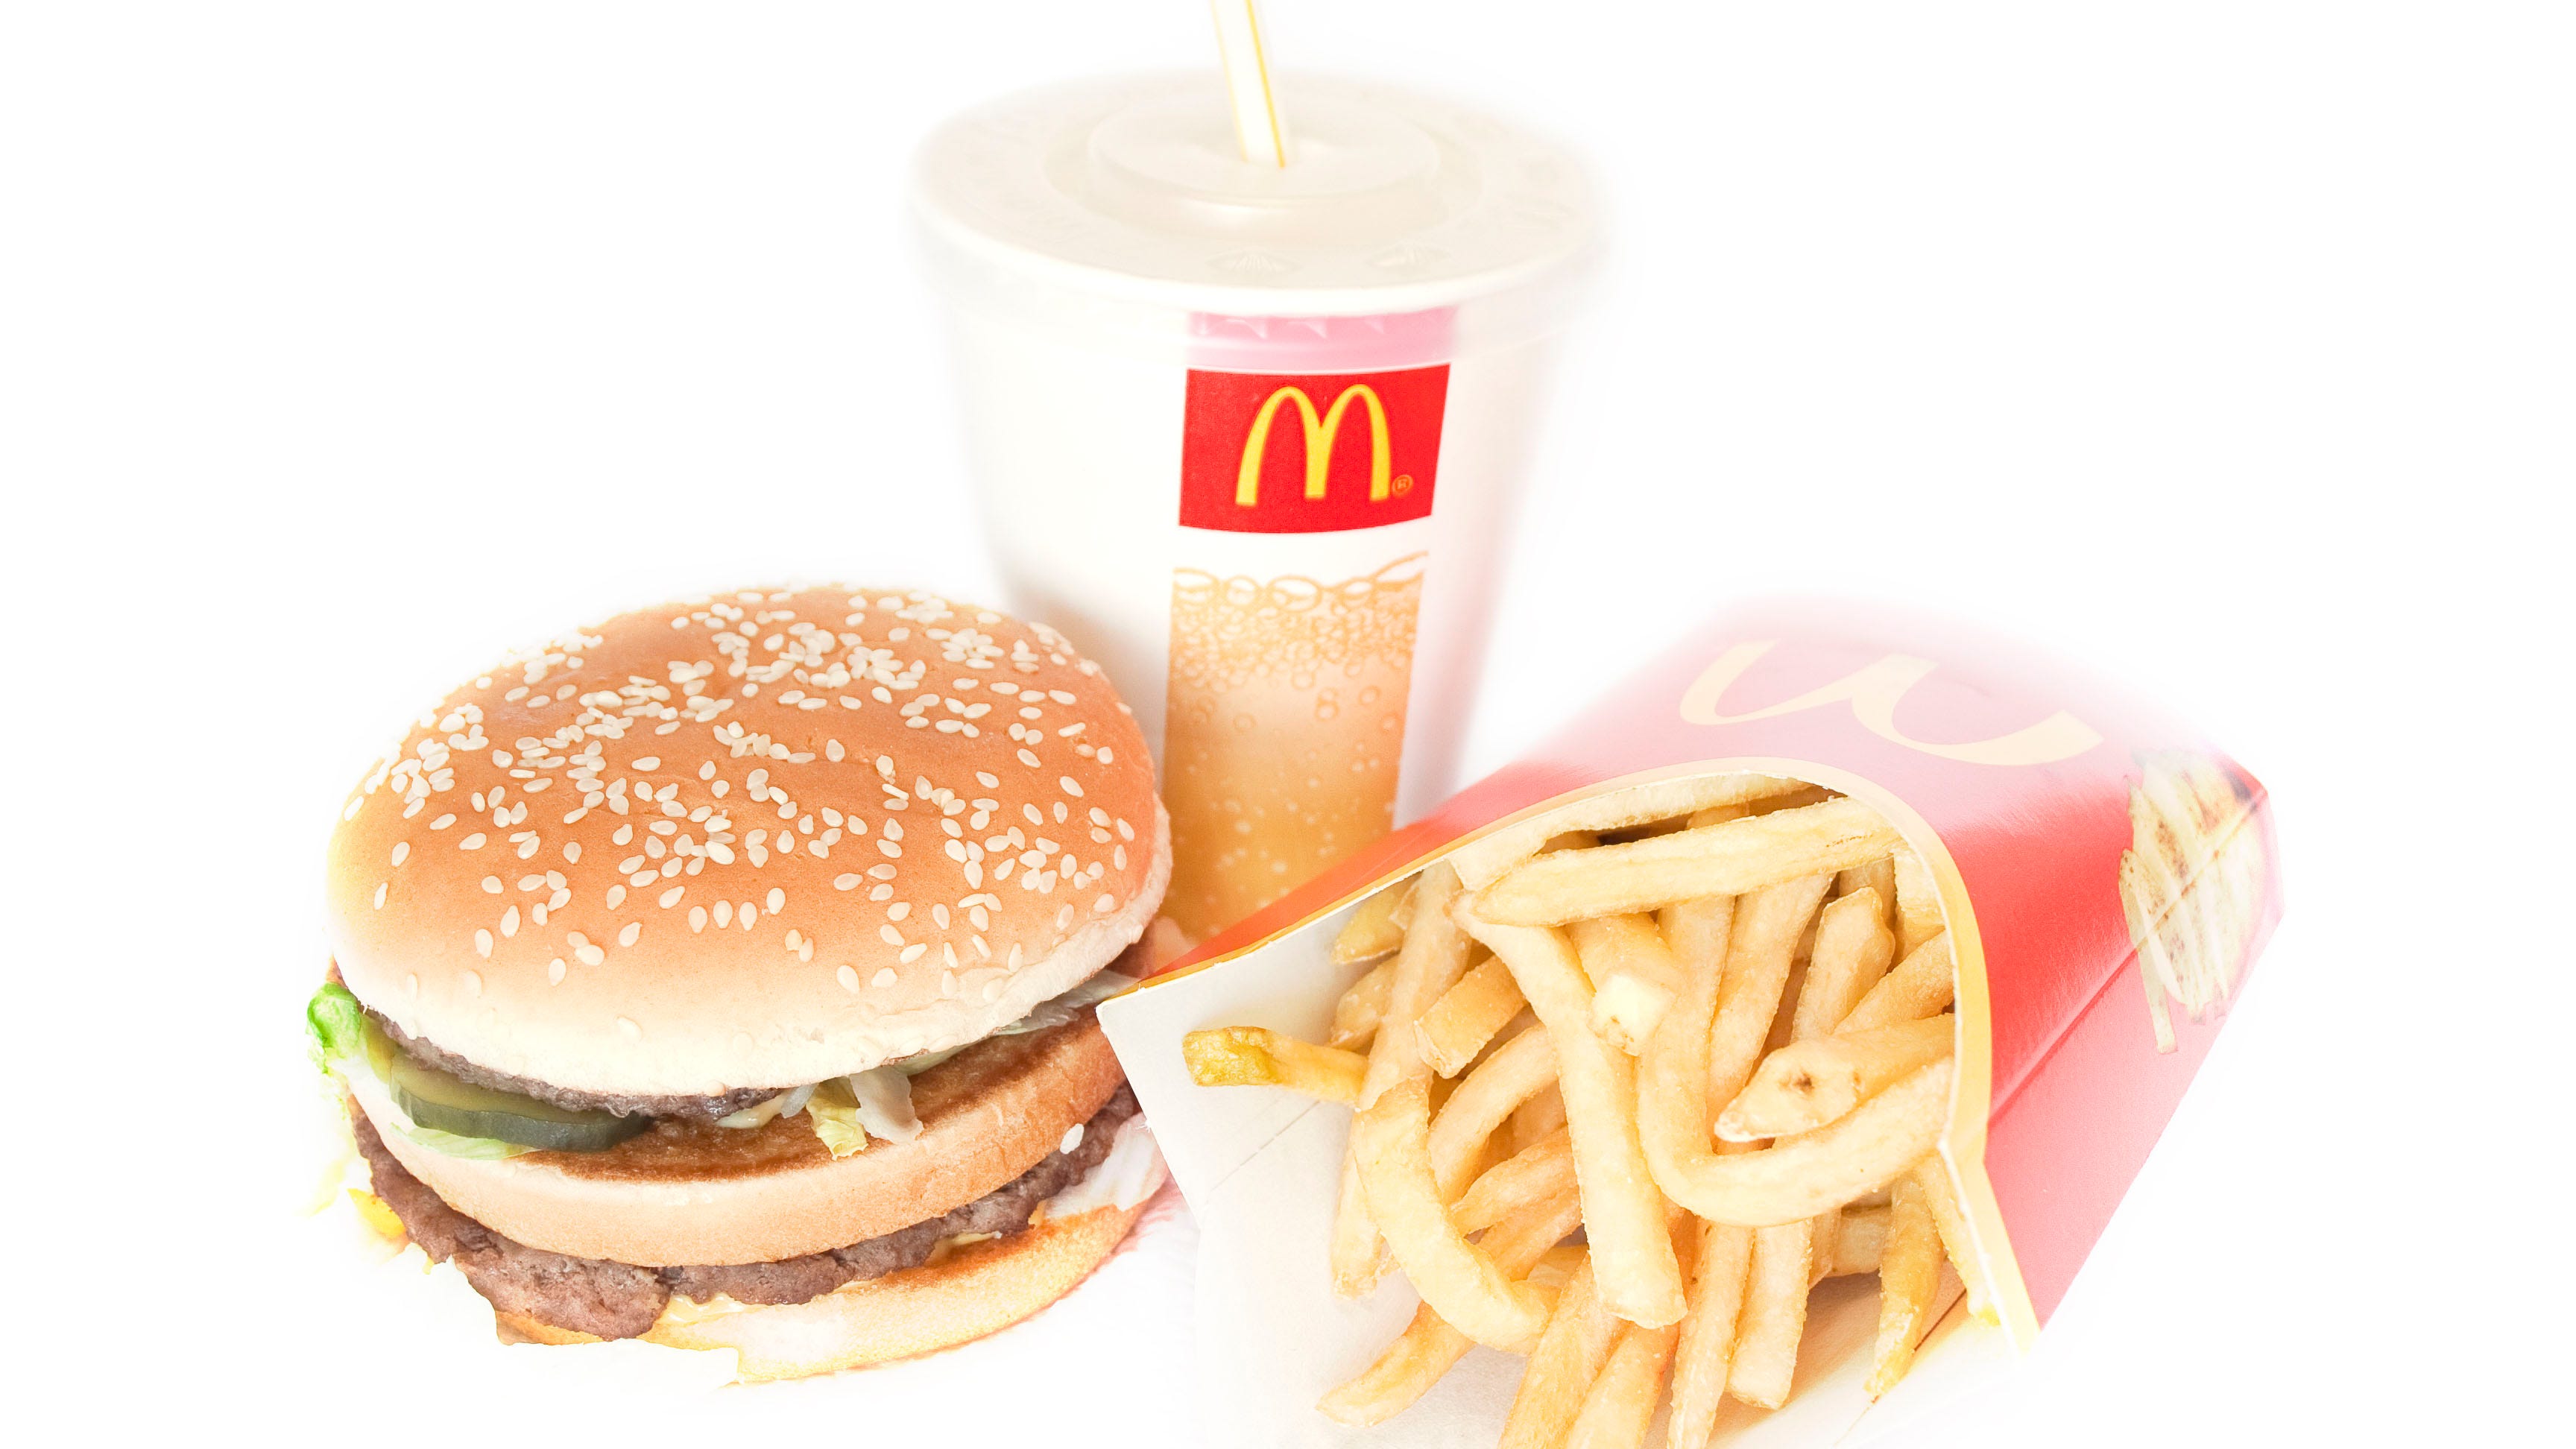 'Hamburglar' steals thousands of dollars of food through McDonald's app